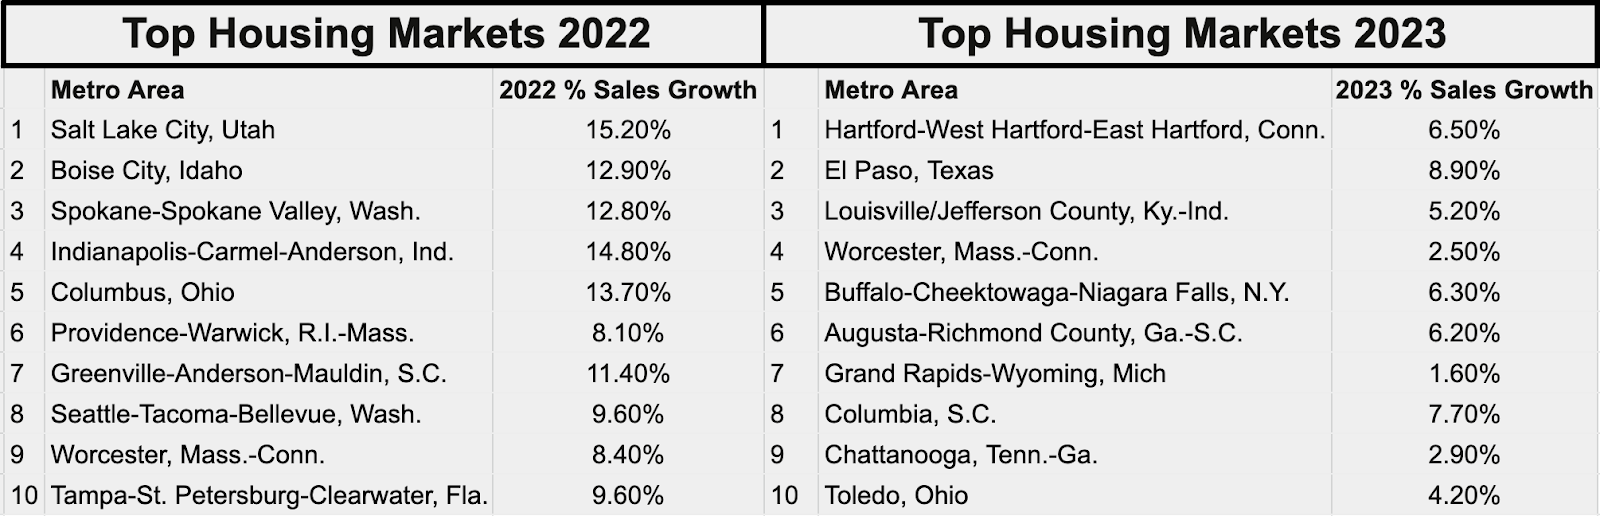 top housing markets 2023 vs 2022